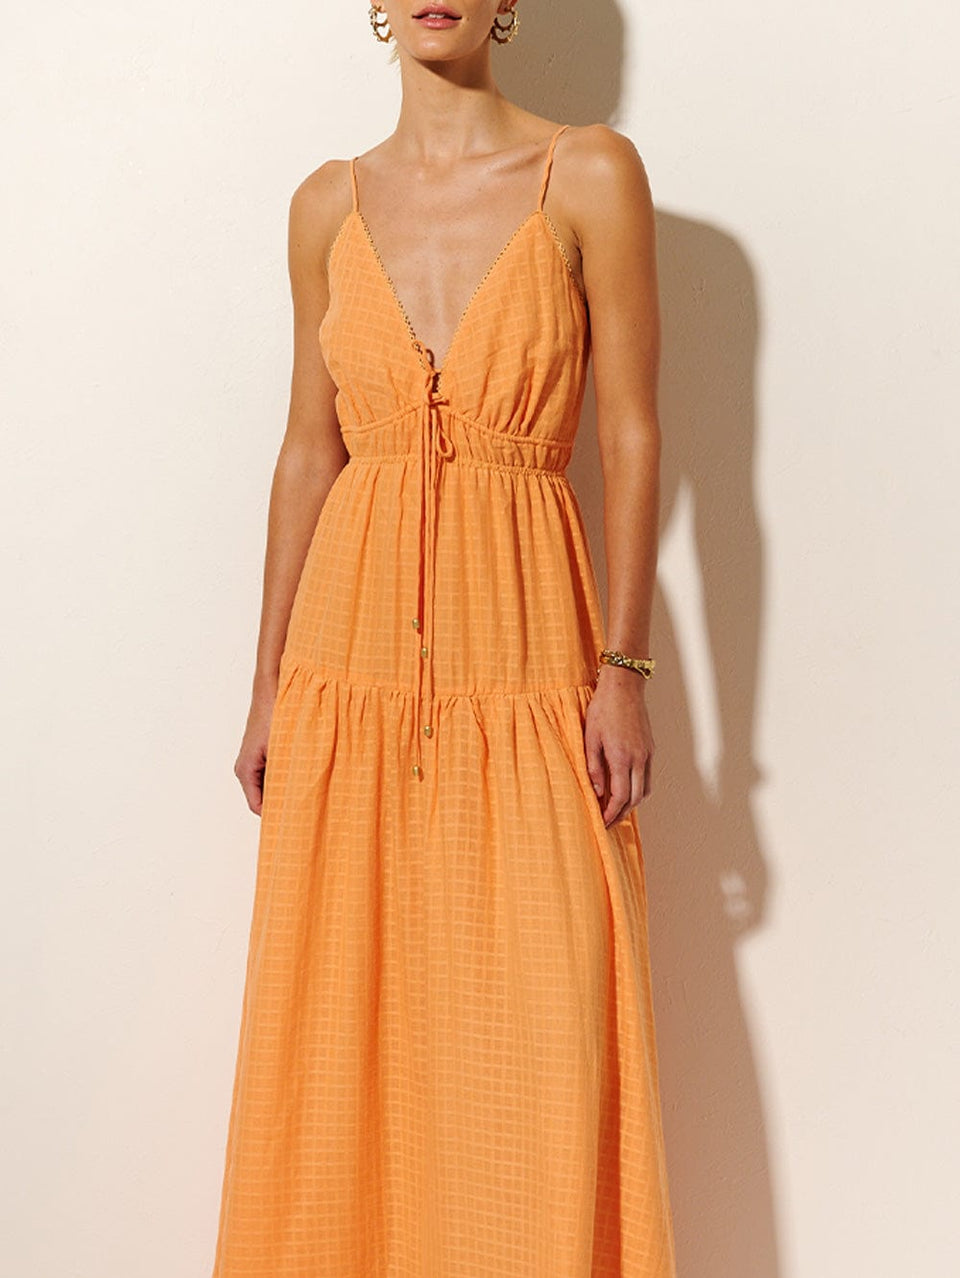 KIVARI Chantelle Maxi Dress | Model wears Peach Maxi Dress